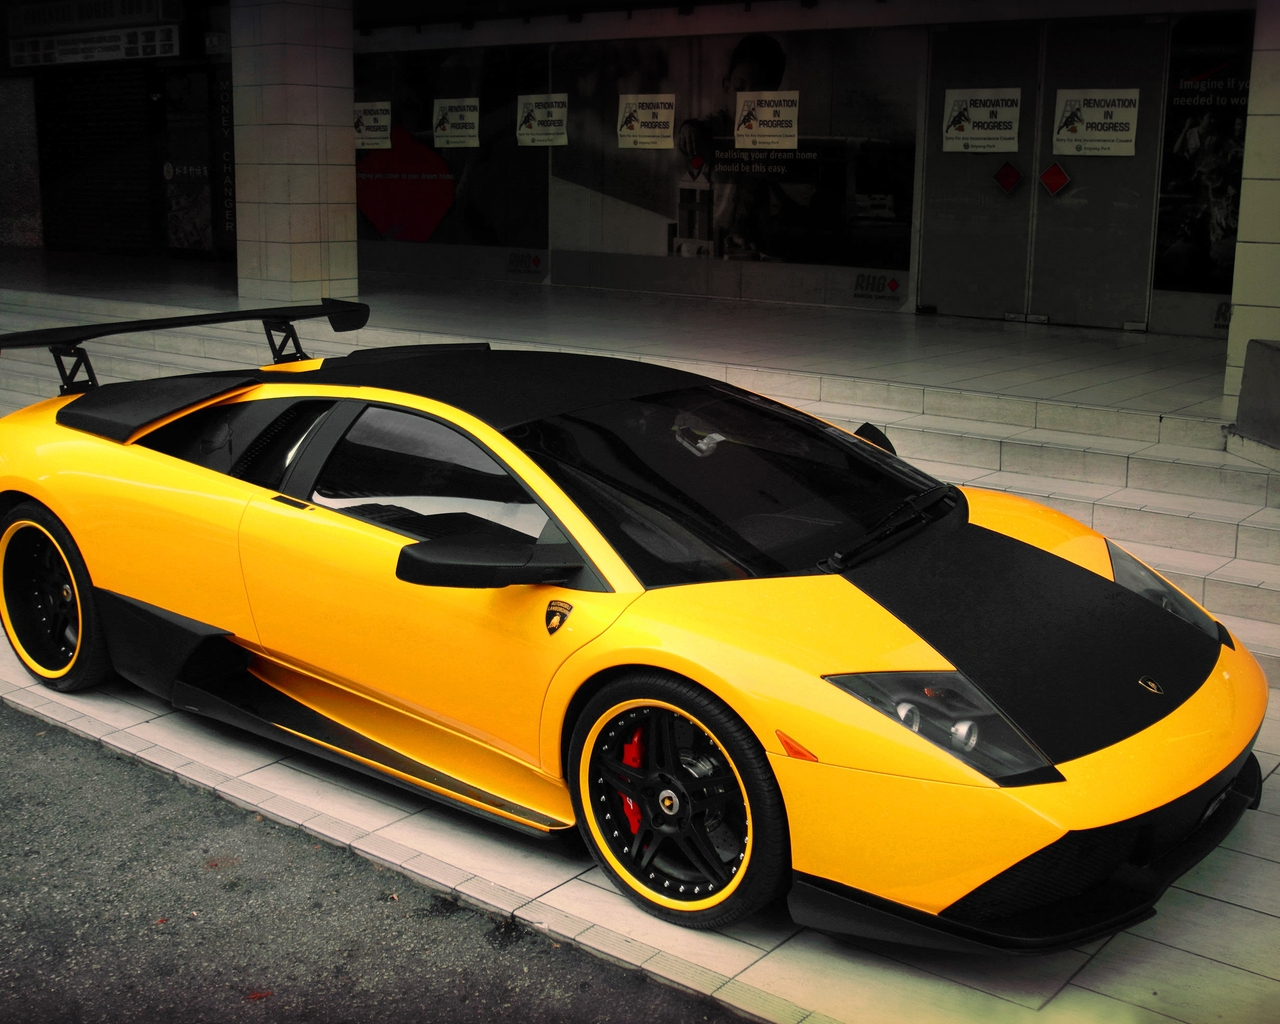 Картинка: Lamborghini, Murcielago, tuning, спойлер, жёлтый, чёрный, спорткар, суперкар, гоночный, мощный